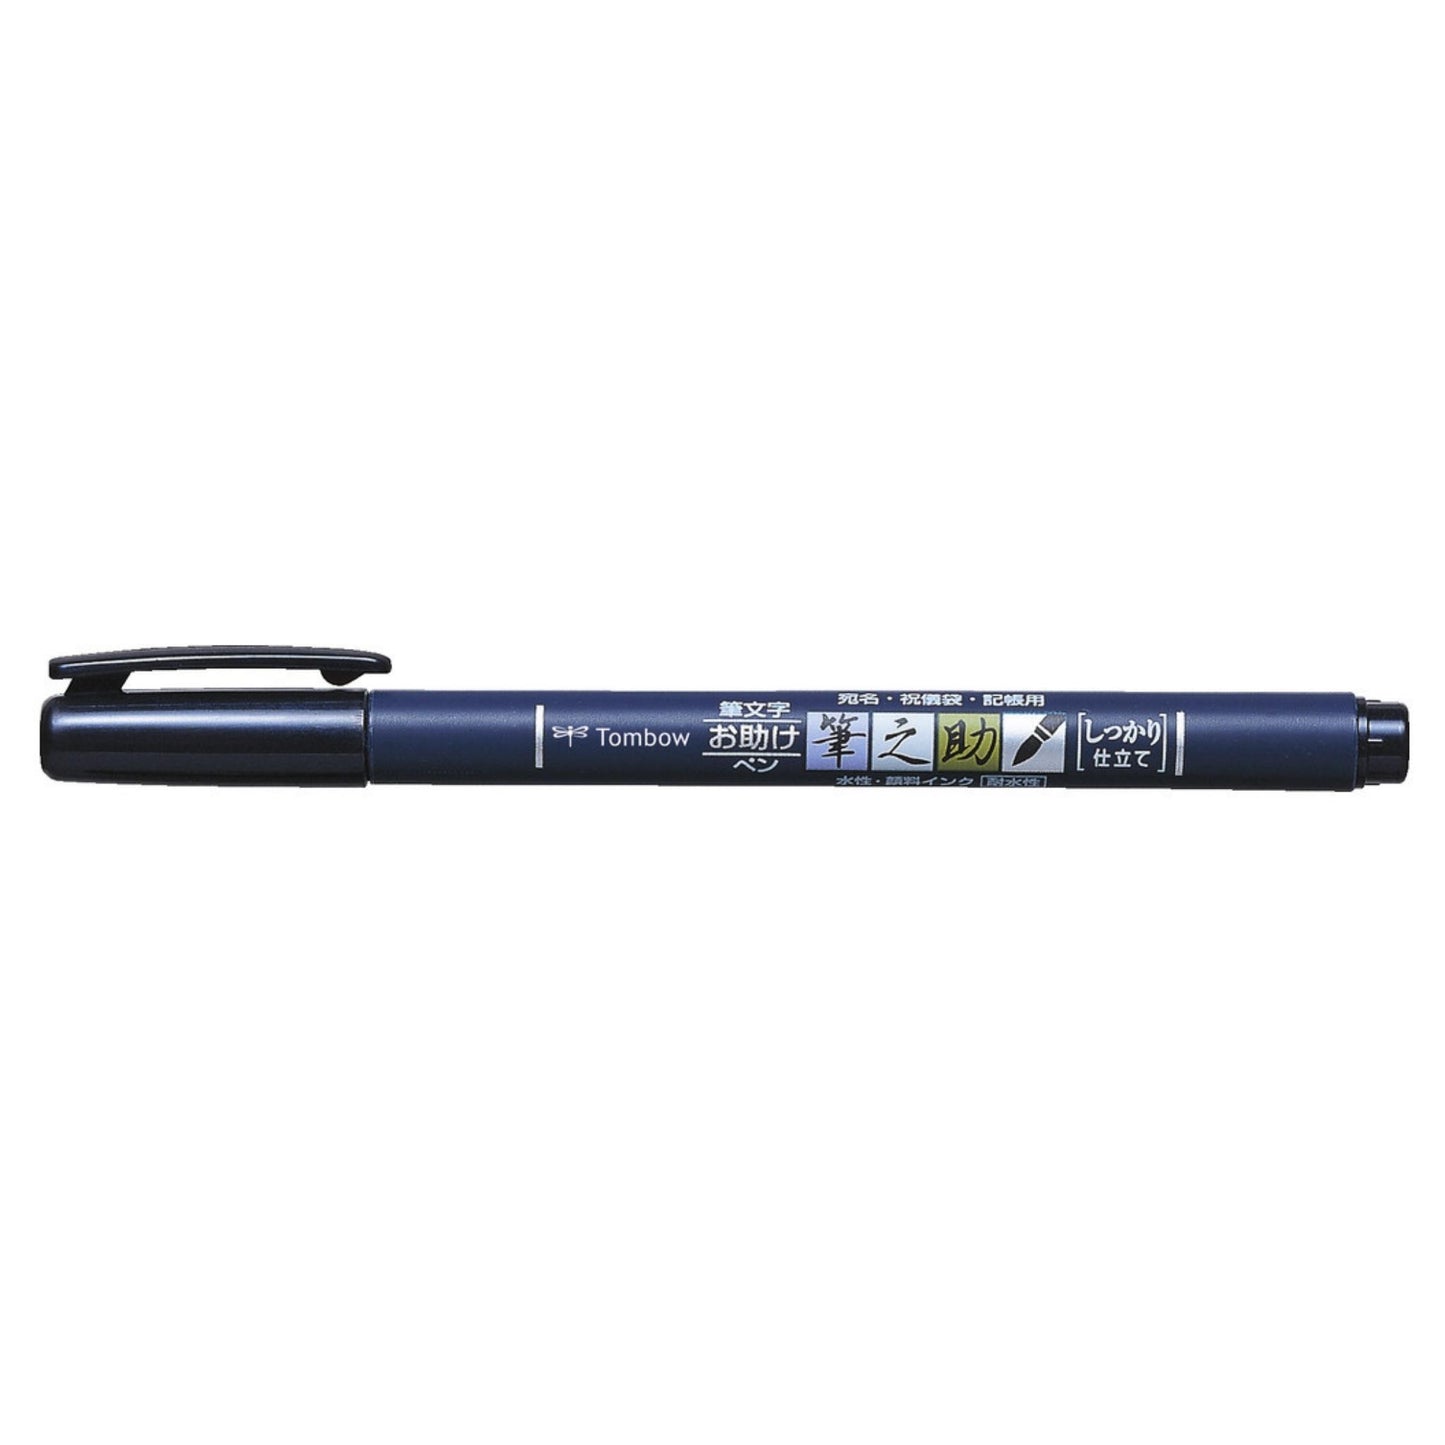 Tombow - Fudenosuke Brush Pen - hart - schwarz